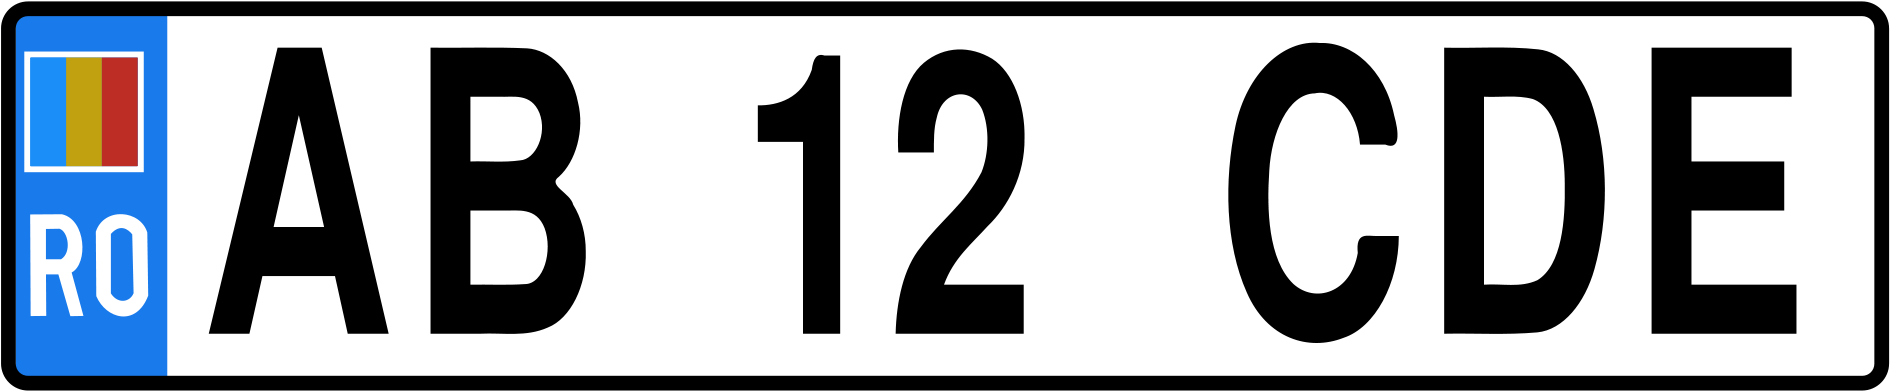 Open - License Plate Ro (2000x533)